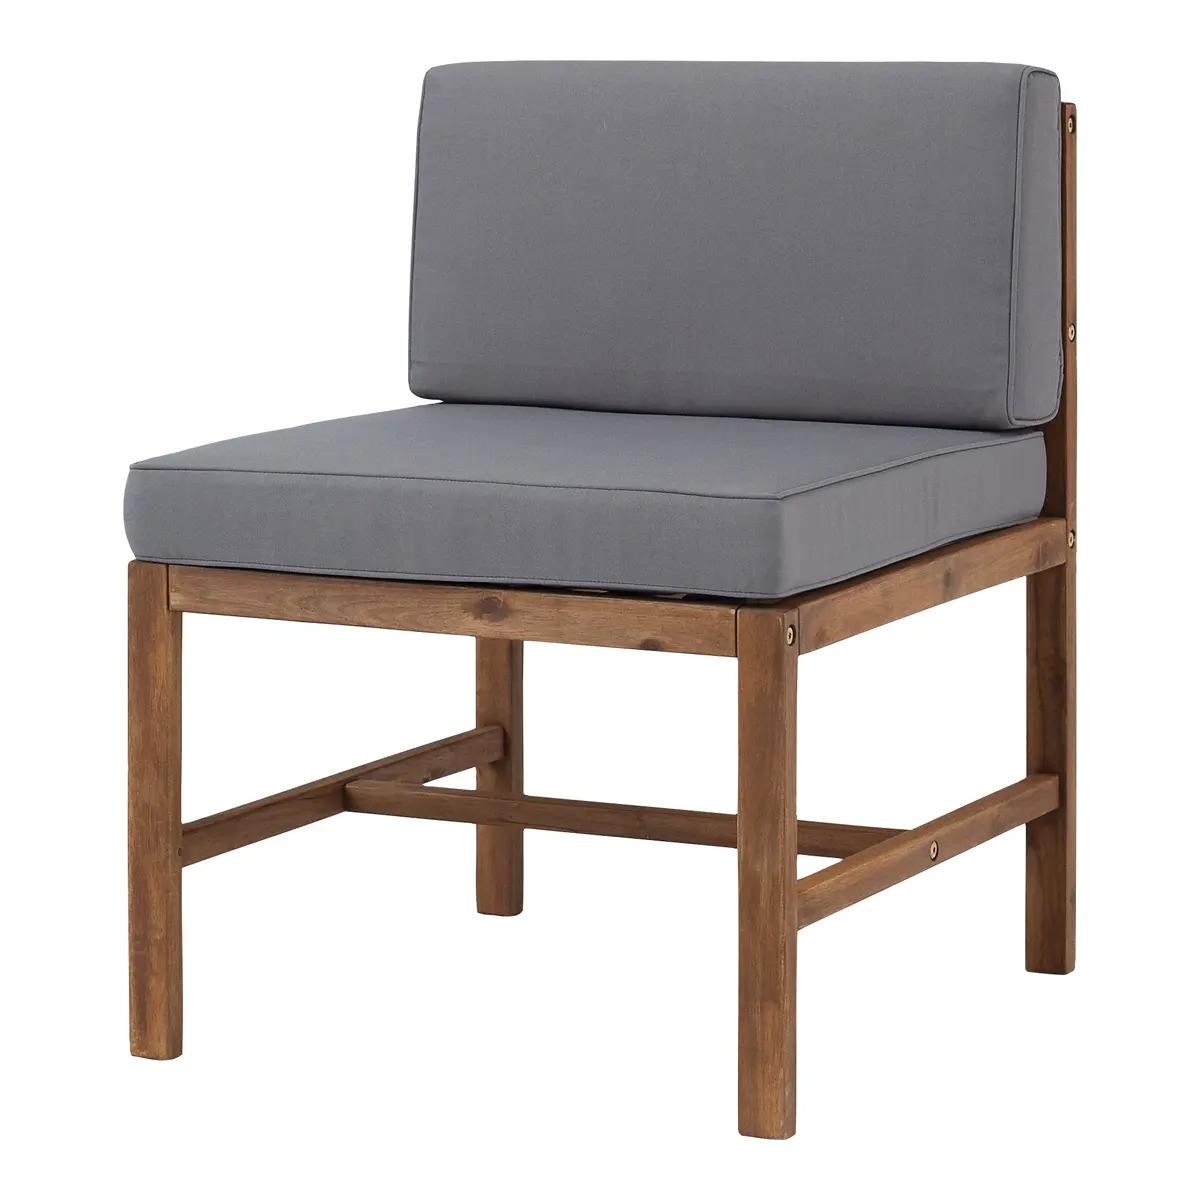 Modular Acacia Wood Armless Chair for $82.03 Shipped